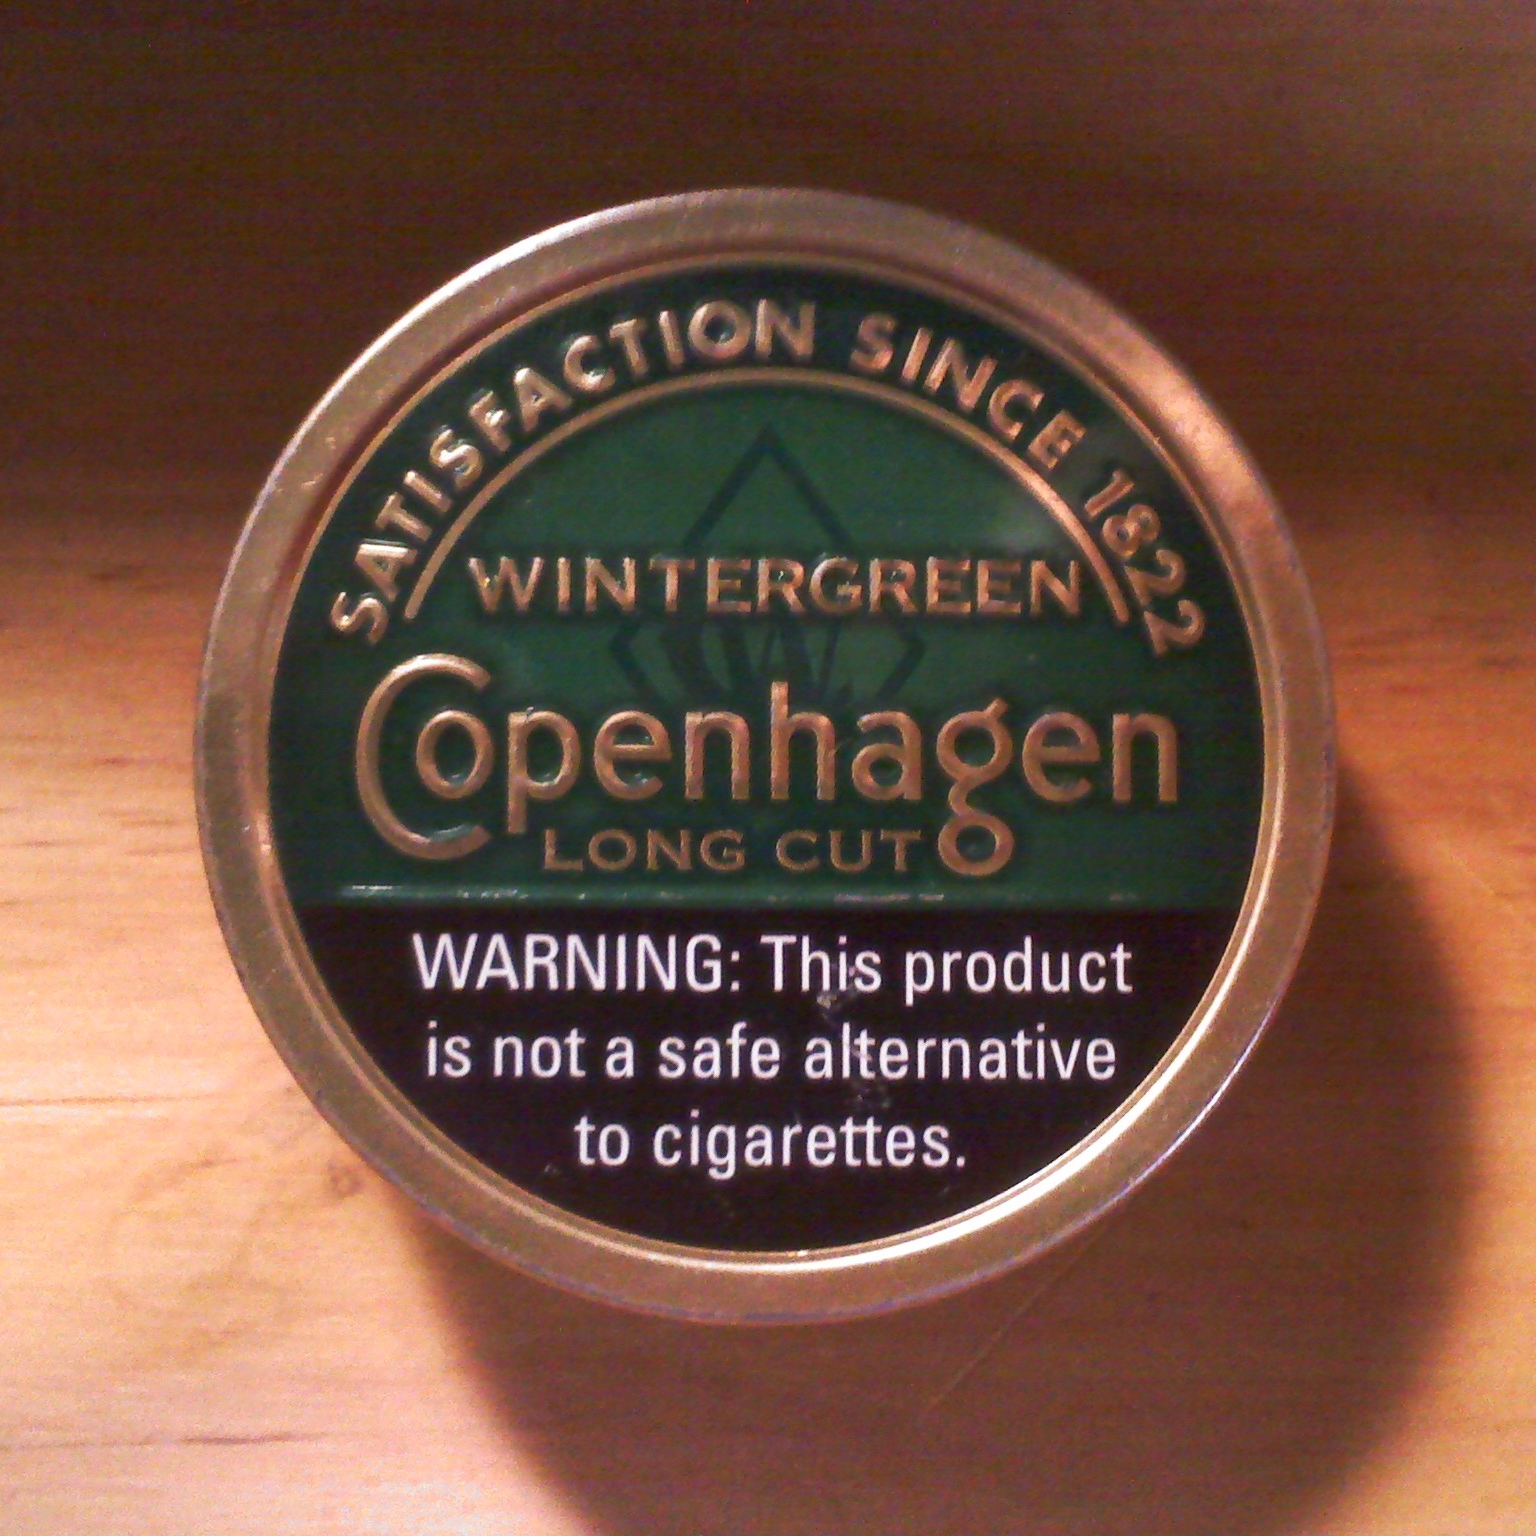 can of Copenhagen Wintergreen Long Cut dipping tobacco